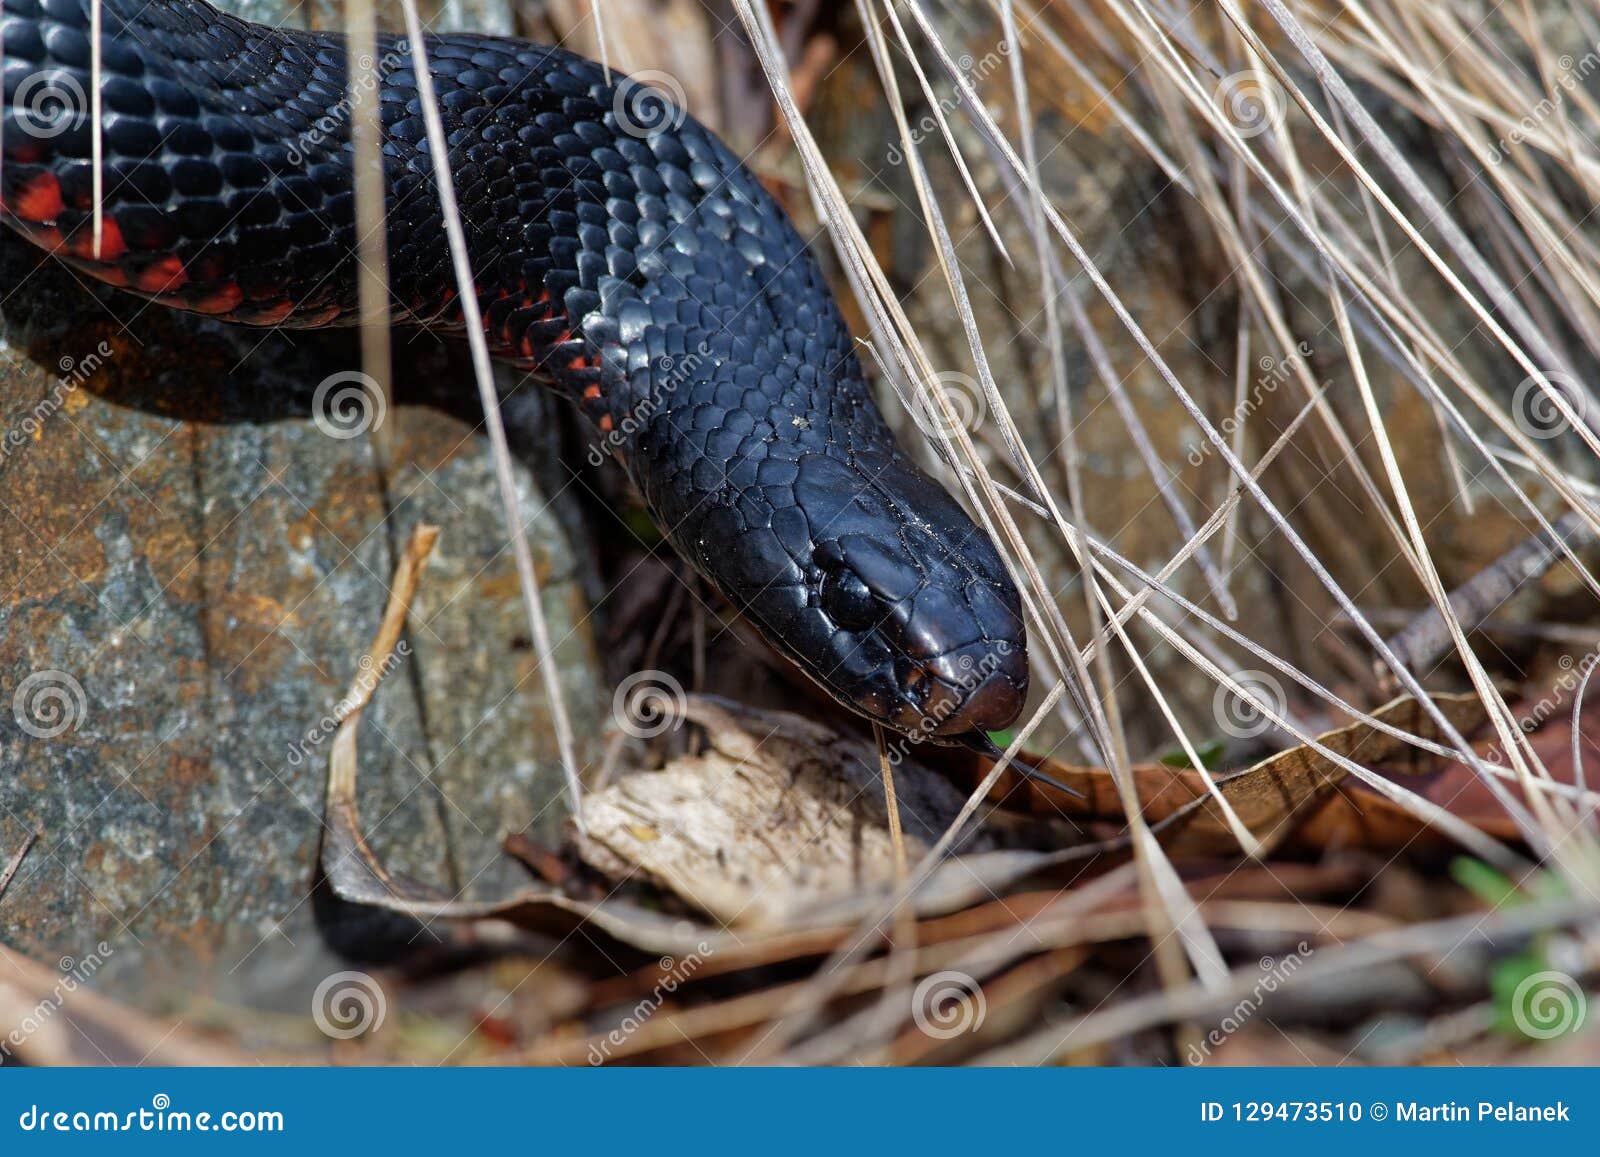 red-bellied black snake - pseudechis porphyriacus species of elapid snake native to eastern australia